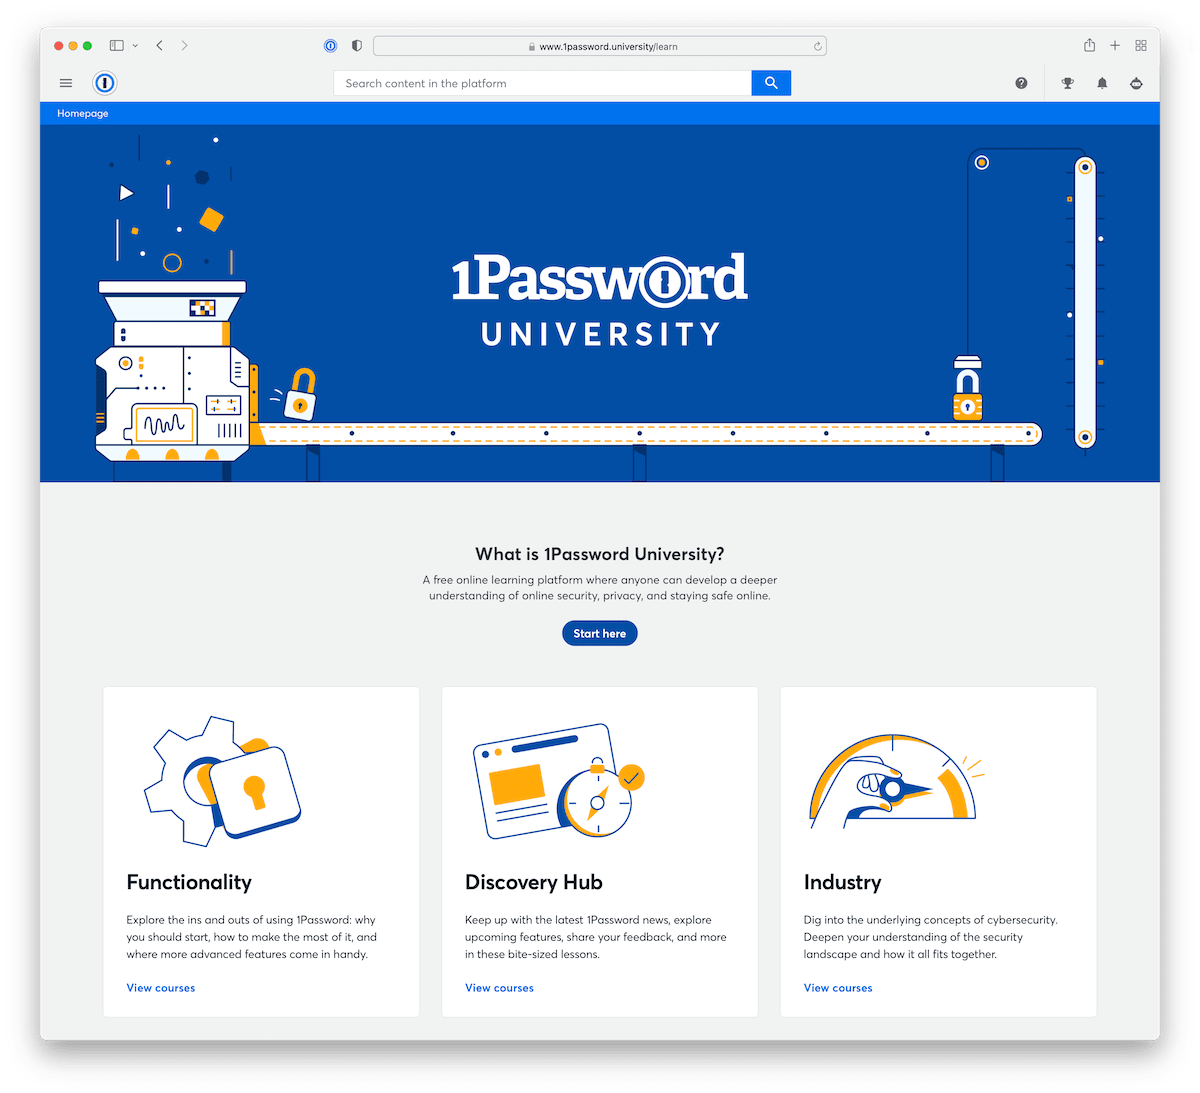 1Password University homepage.